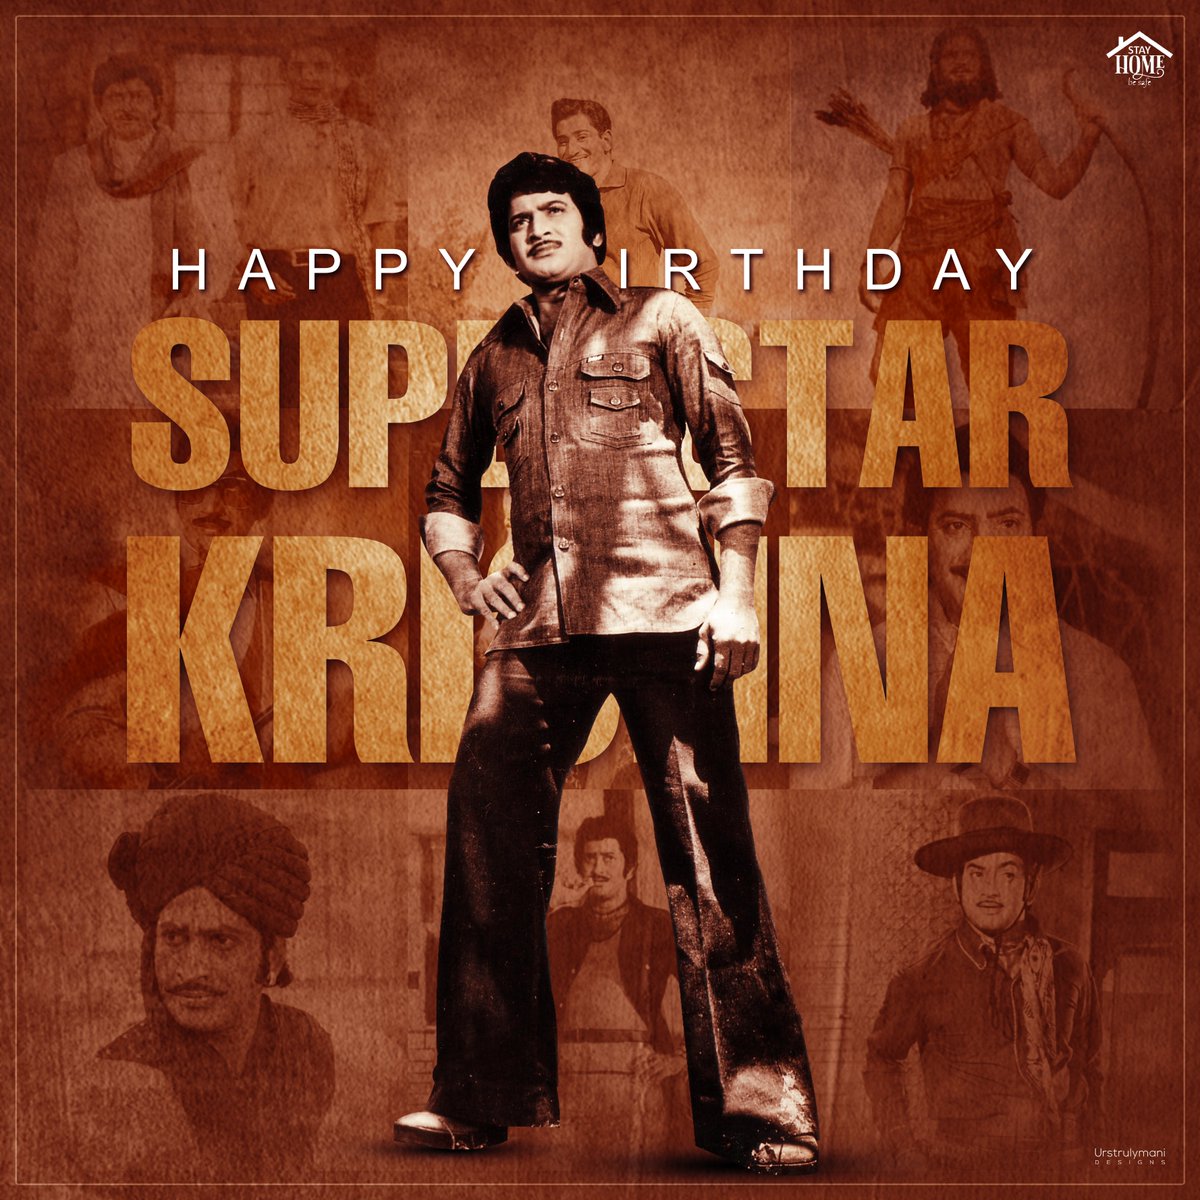 Wishing a very Happy birthday to Super star Krishna garu..💐💐
#HBDSuperstarKrishnaGaru